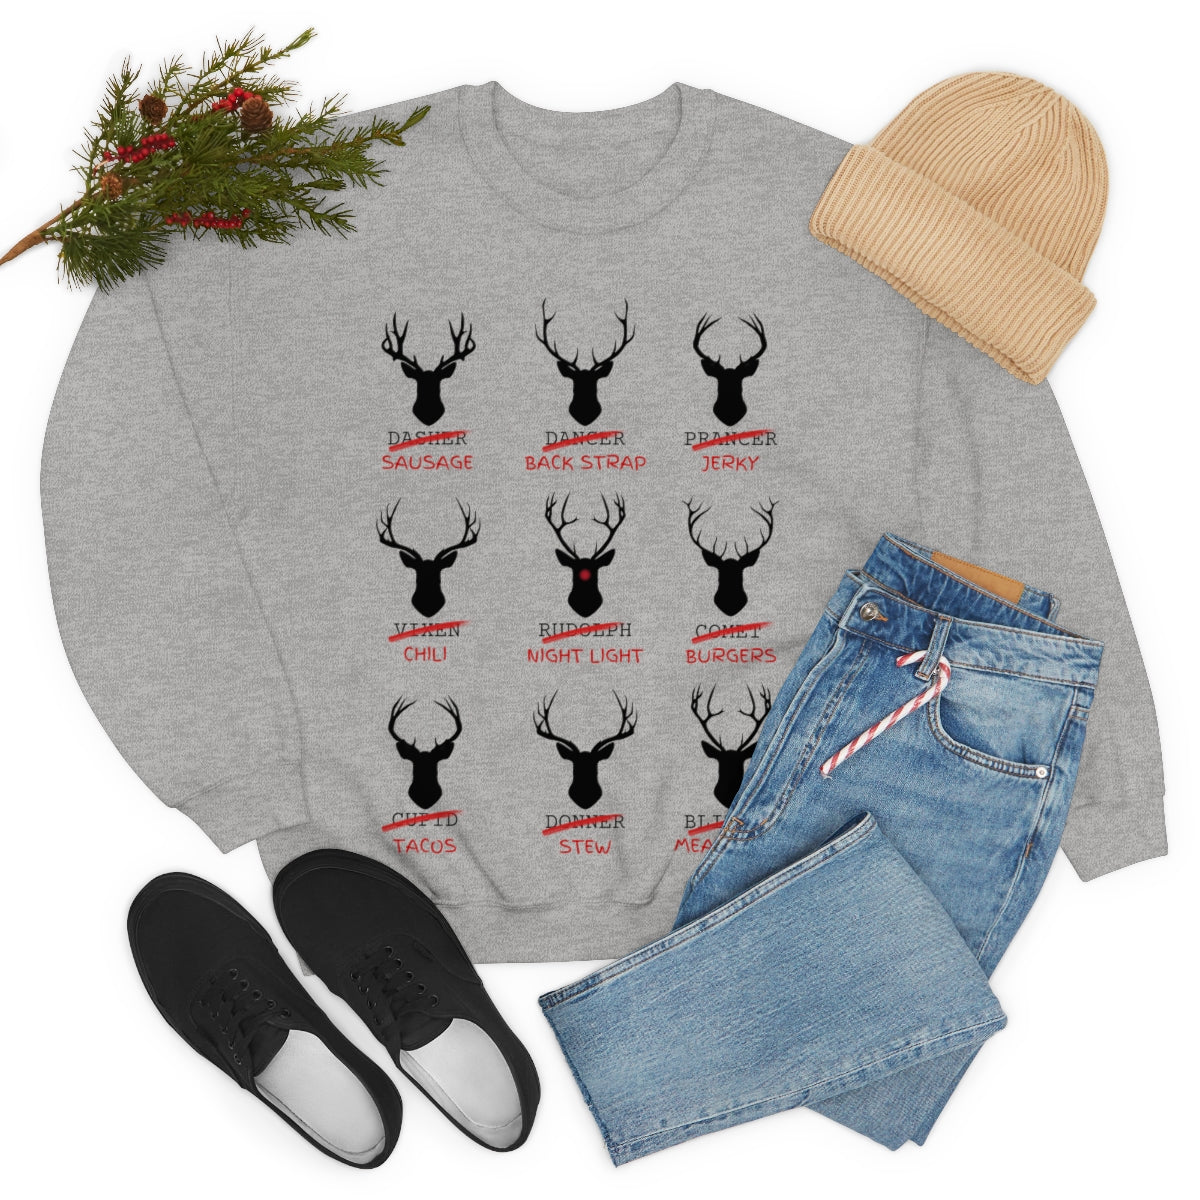 Funny reindeer names sweatshirt